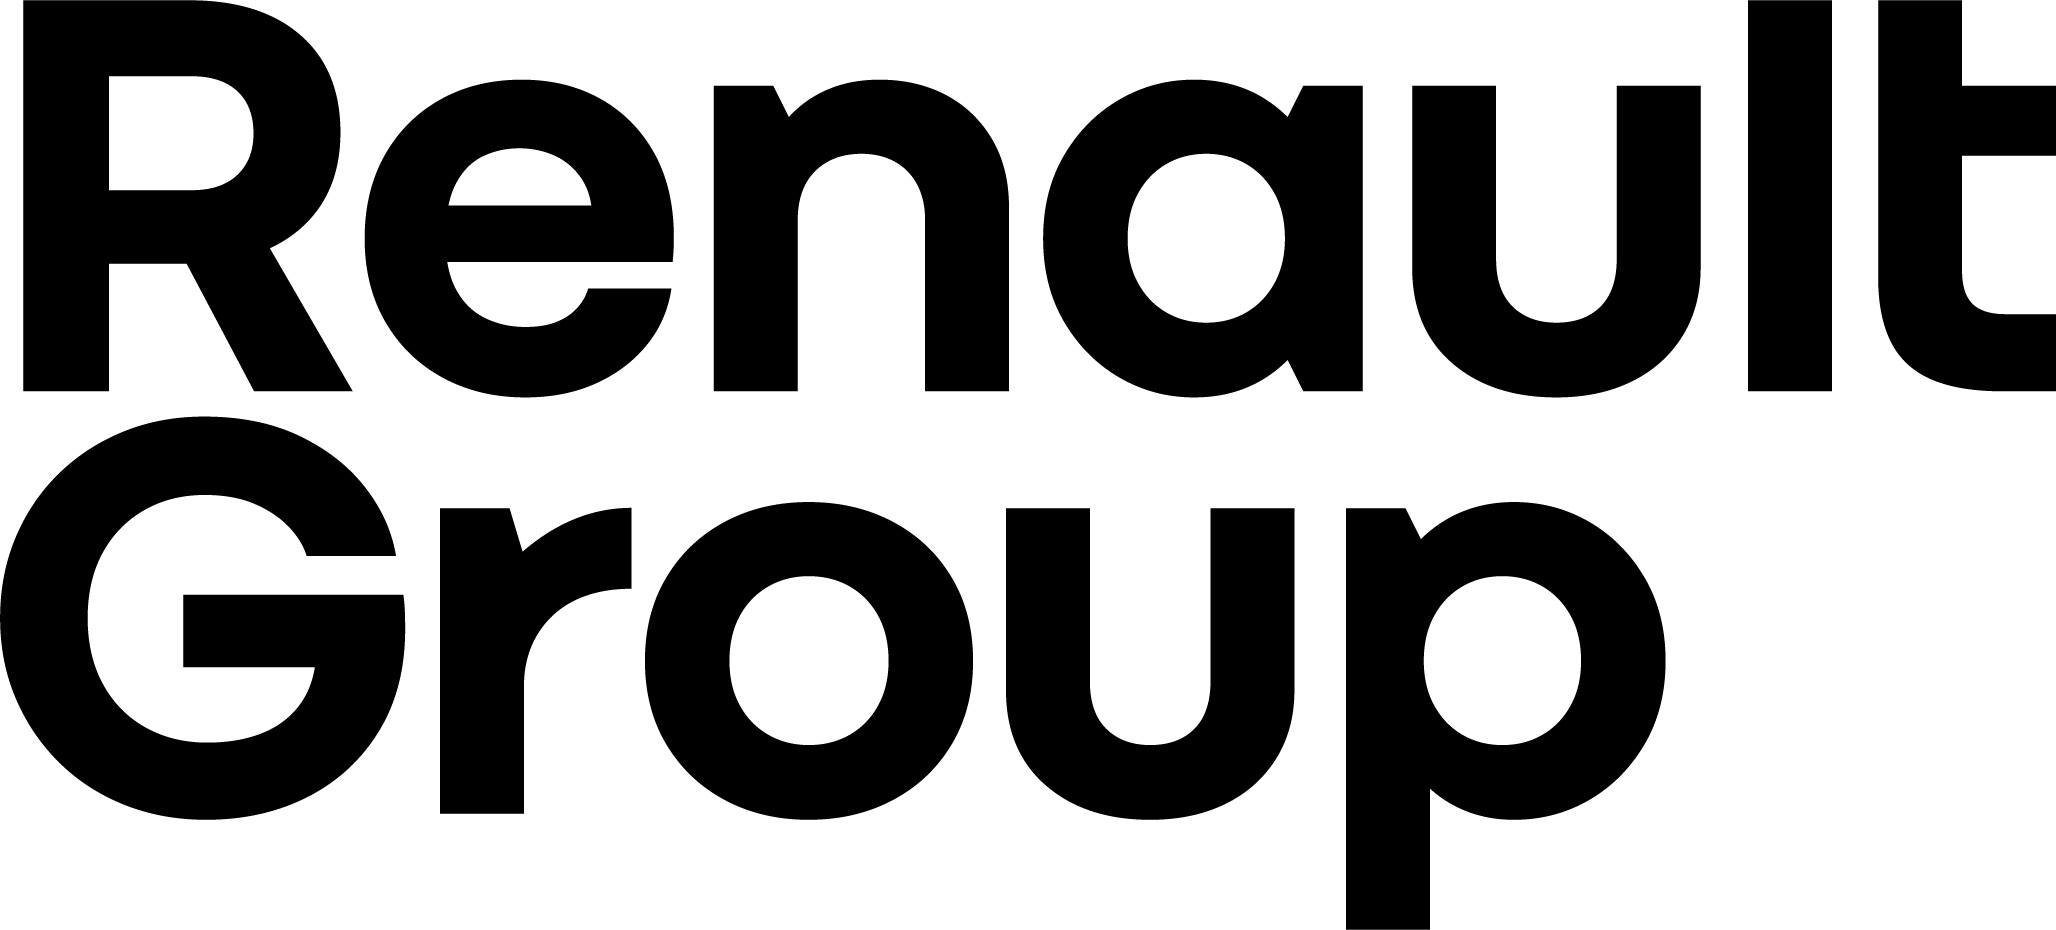 Group Renault